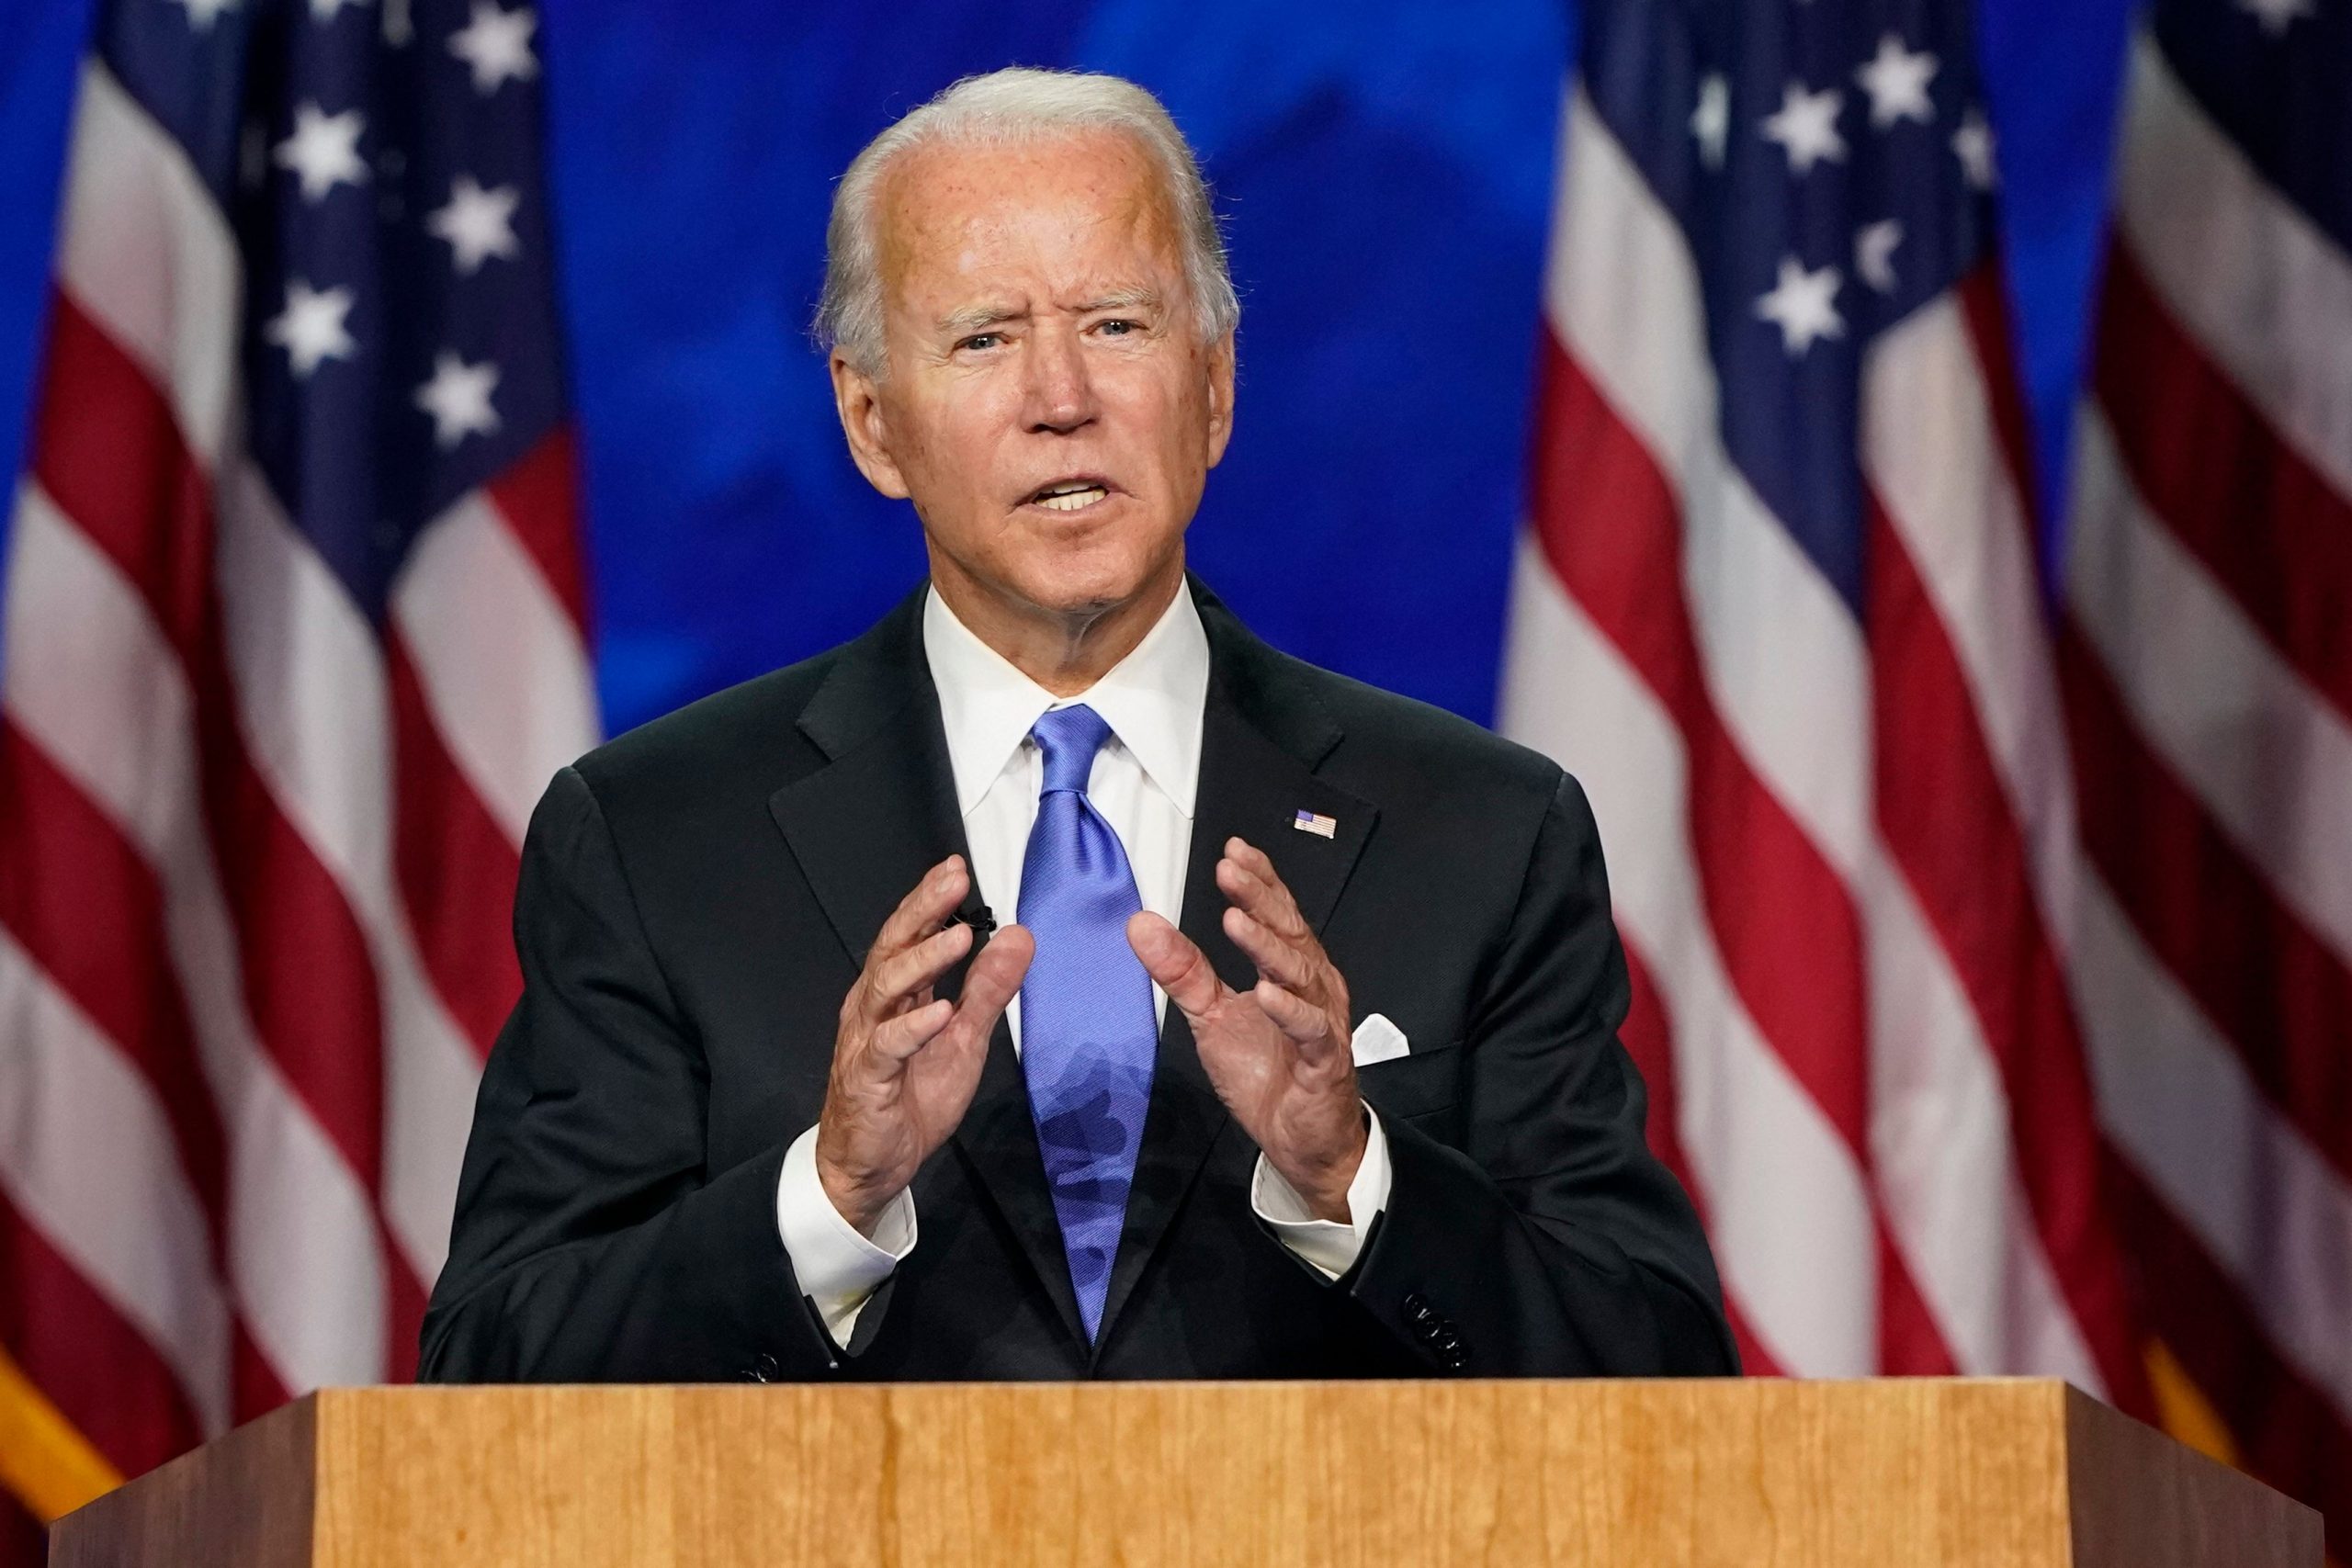 Its bizarre, totally bizarre: Joe Biden asks QAnon supporters to get mental health check